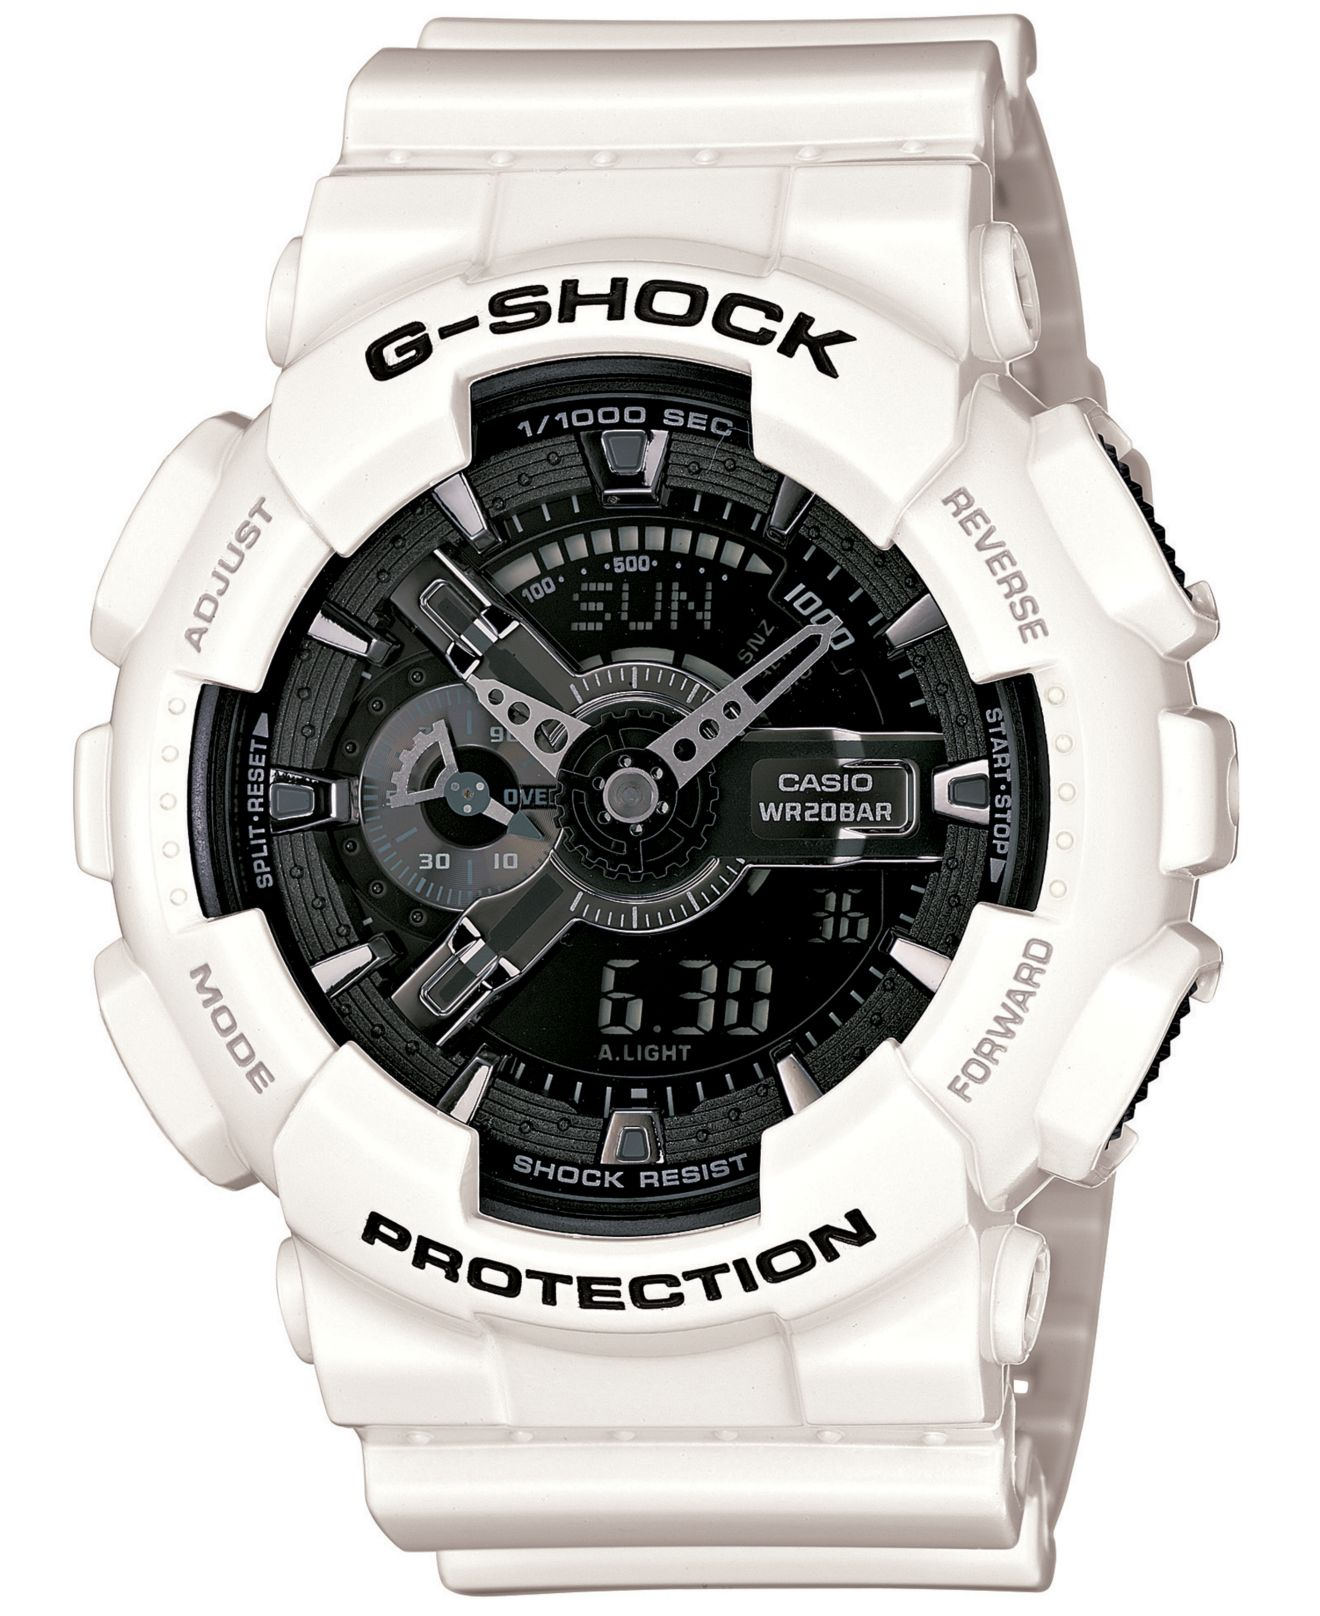 Lyst - G-Shock Men's Analog-digital White Resin Strap Watch 51x55mm Ga110gw-7a in ...